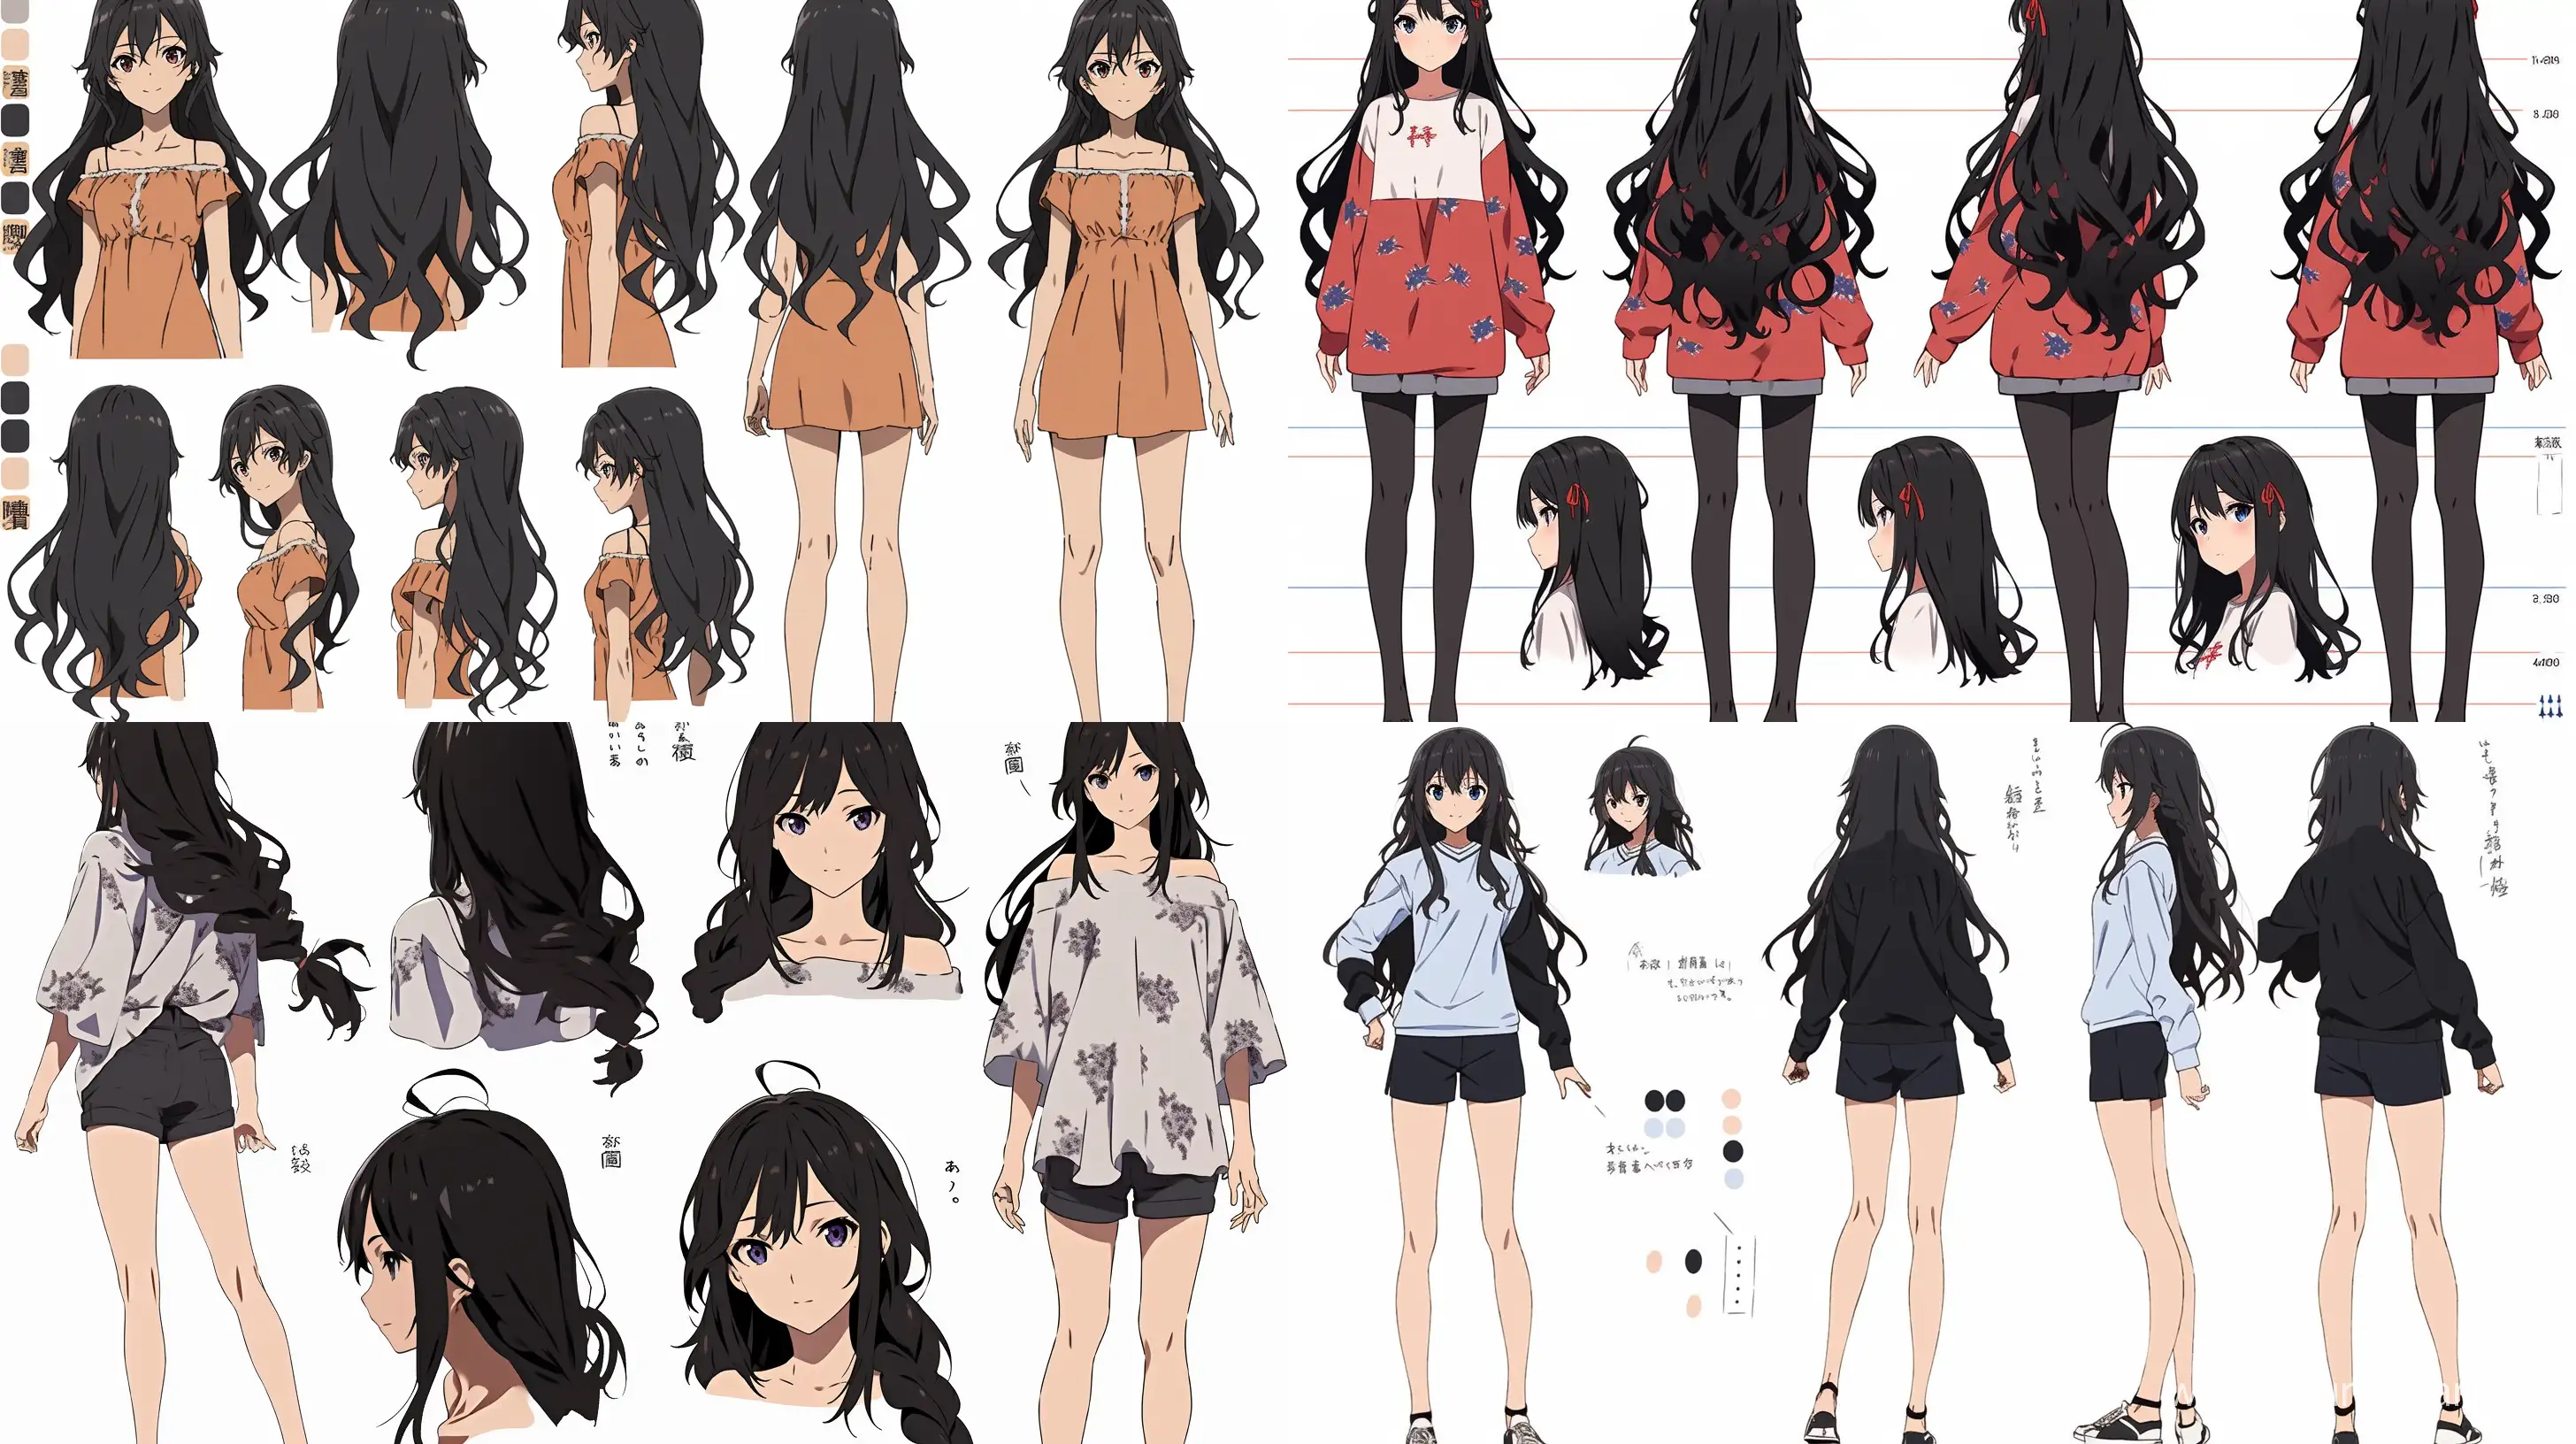 Stylish-High-School-Girl-with-ShoulderLength-Black-Hair-Anime-Character-Art